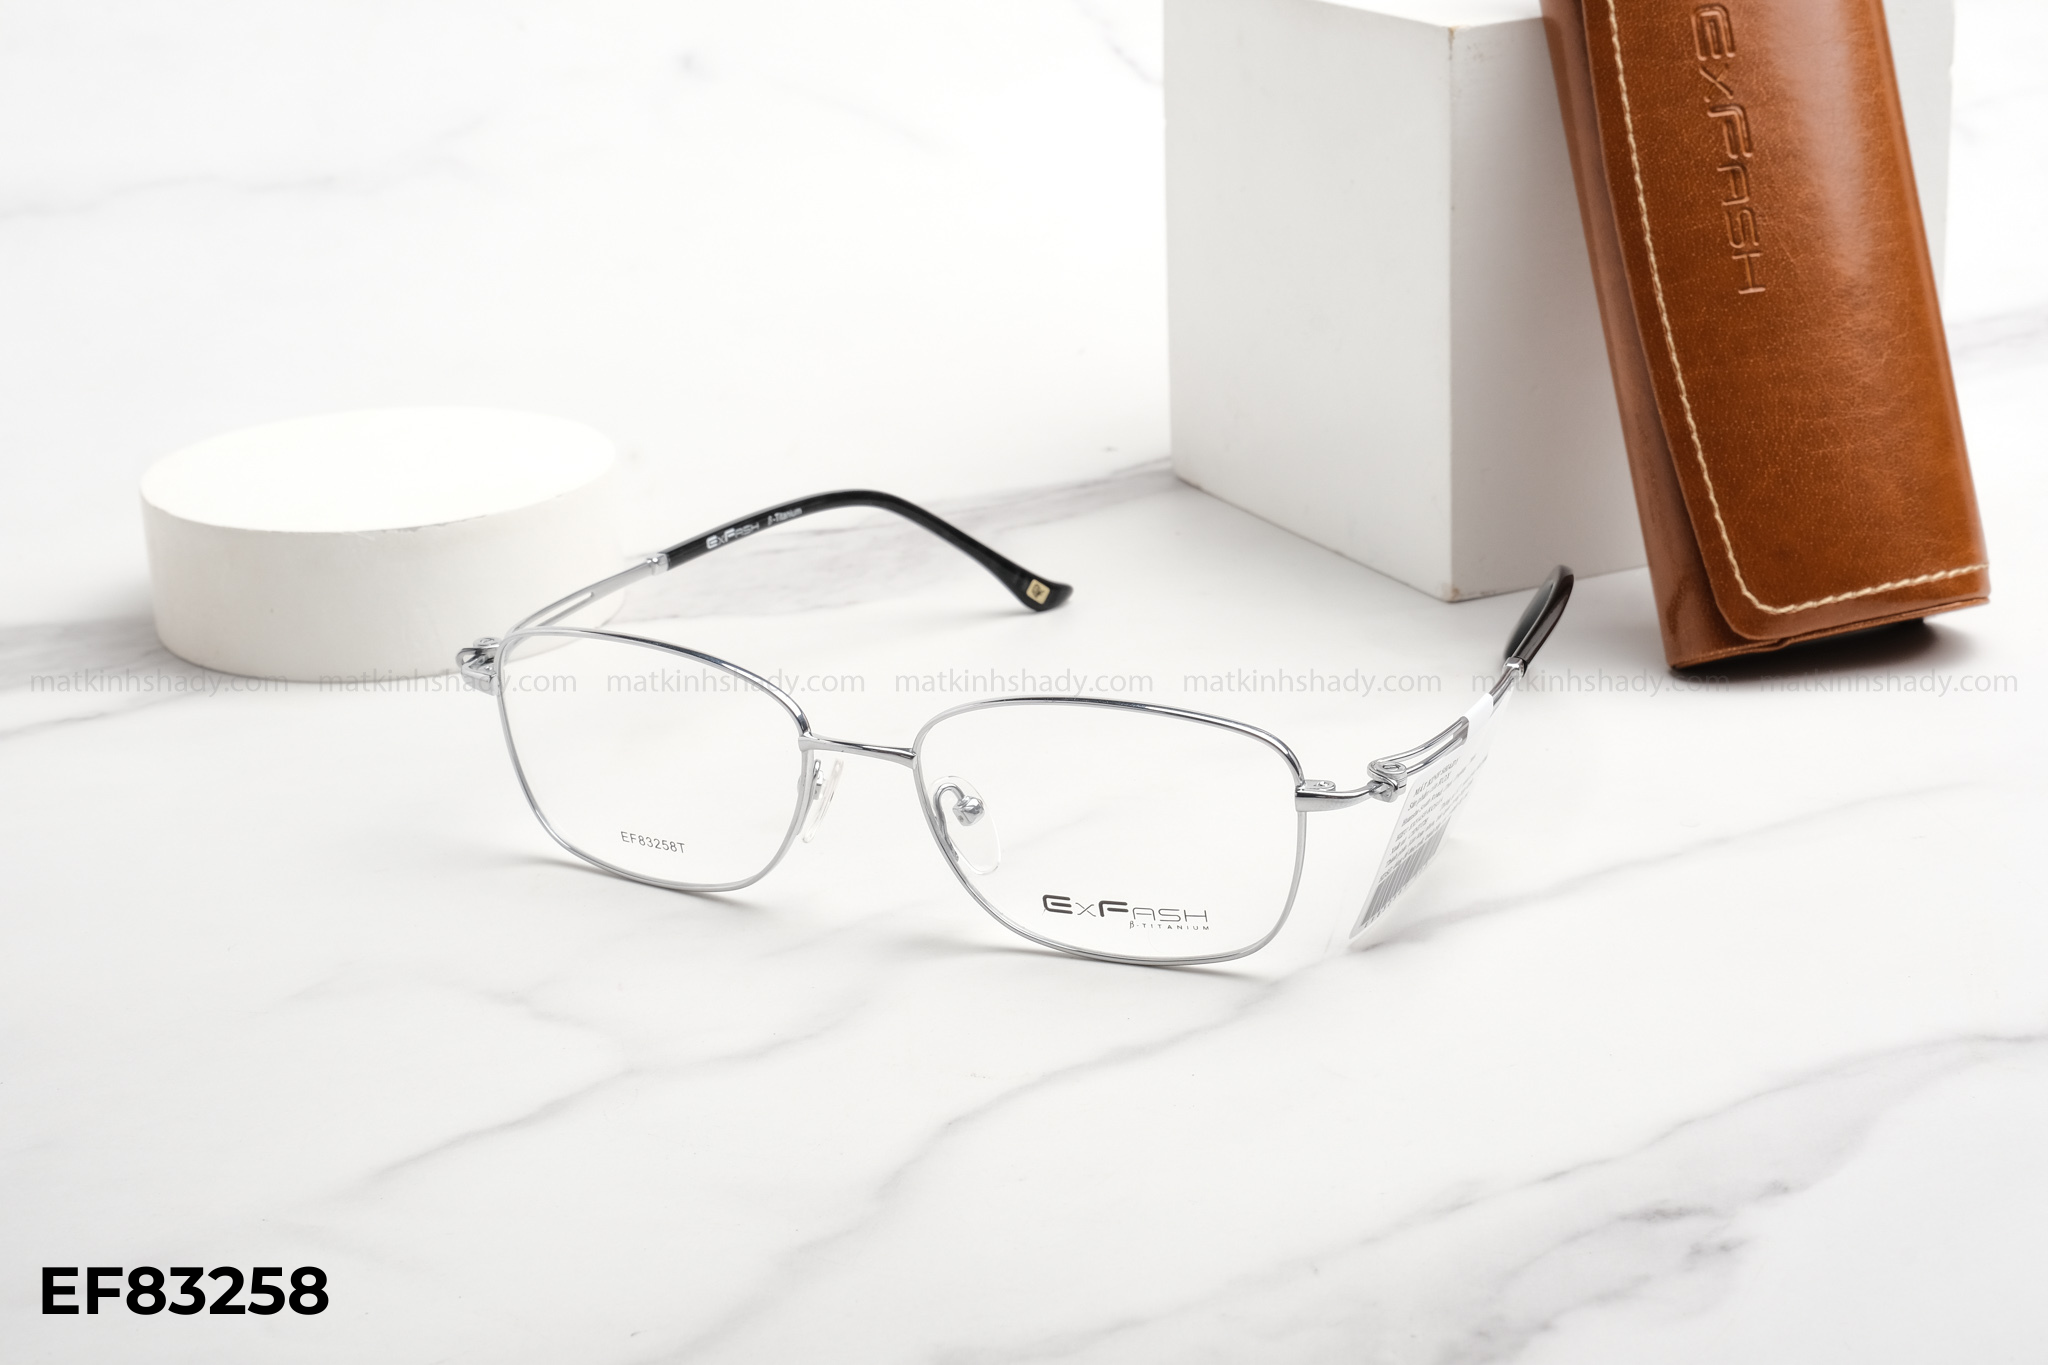  Exfash Eyewear - Glasses - EF83258 